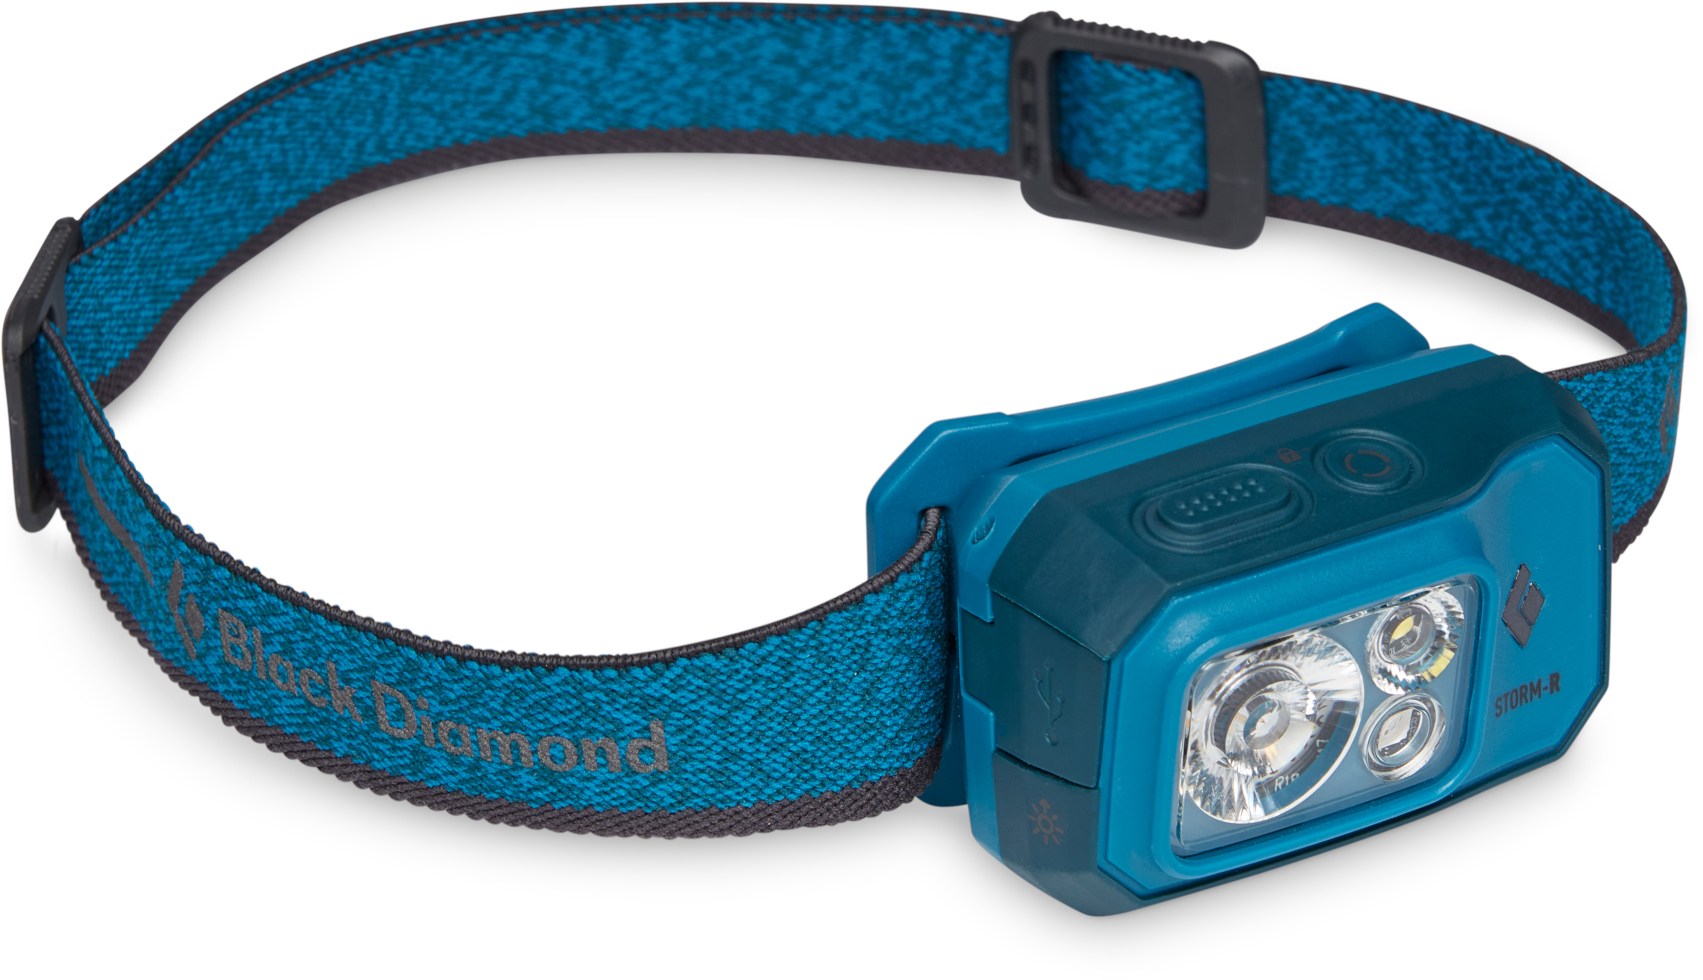 Налобный фонарь Storm 500-R Black Diamond, синий налобный фонарь для трейлраннинга 250 люмен ontrail evadict